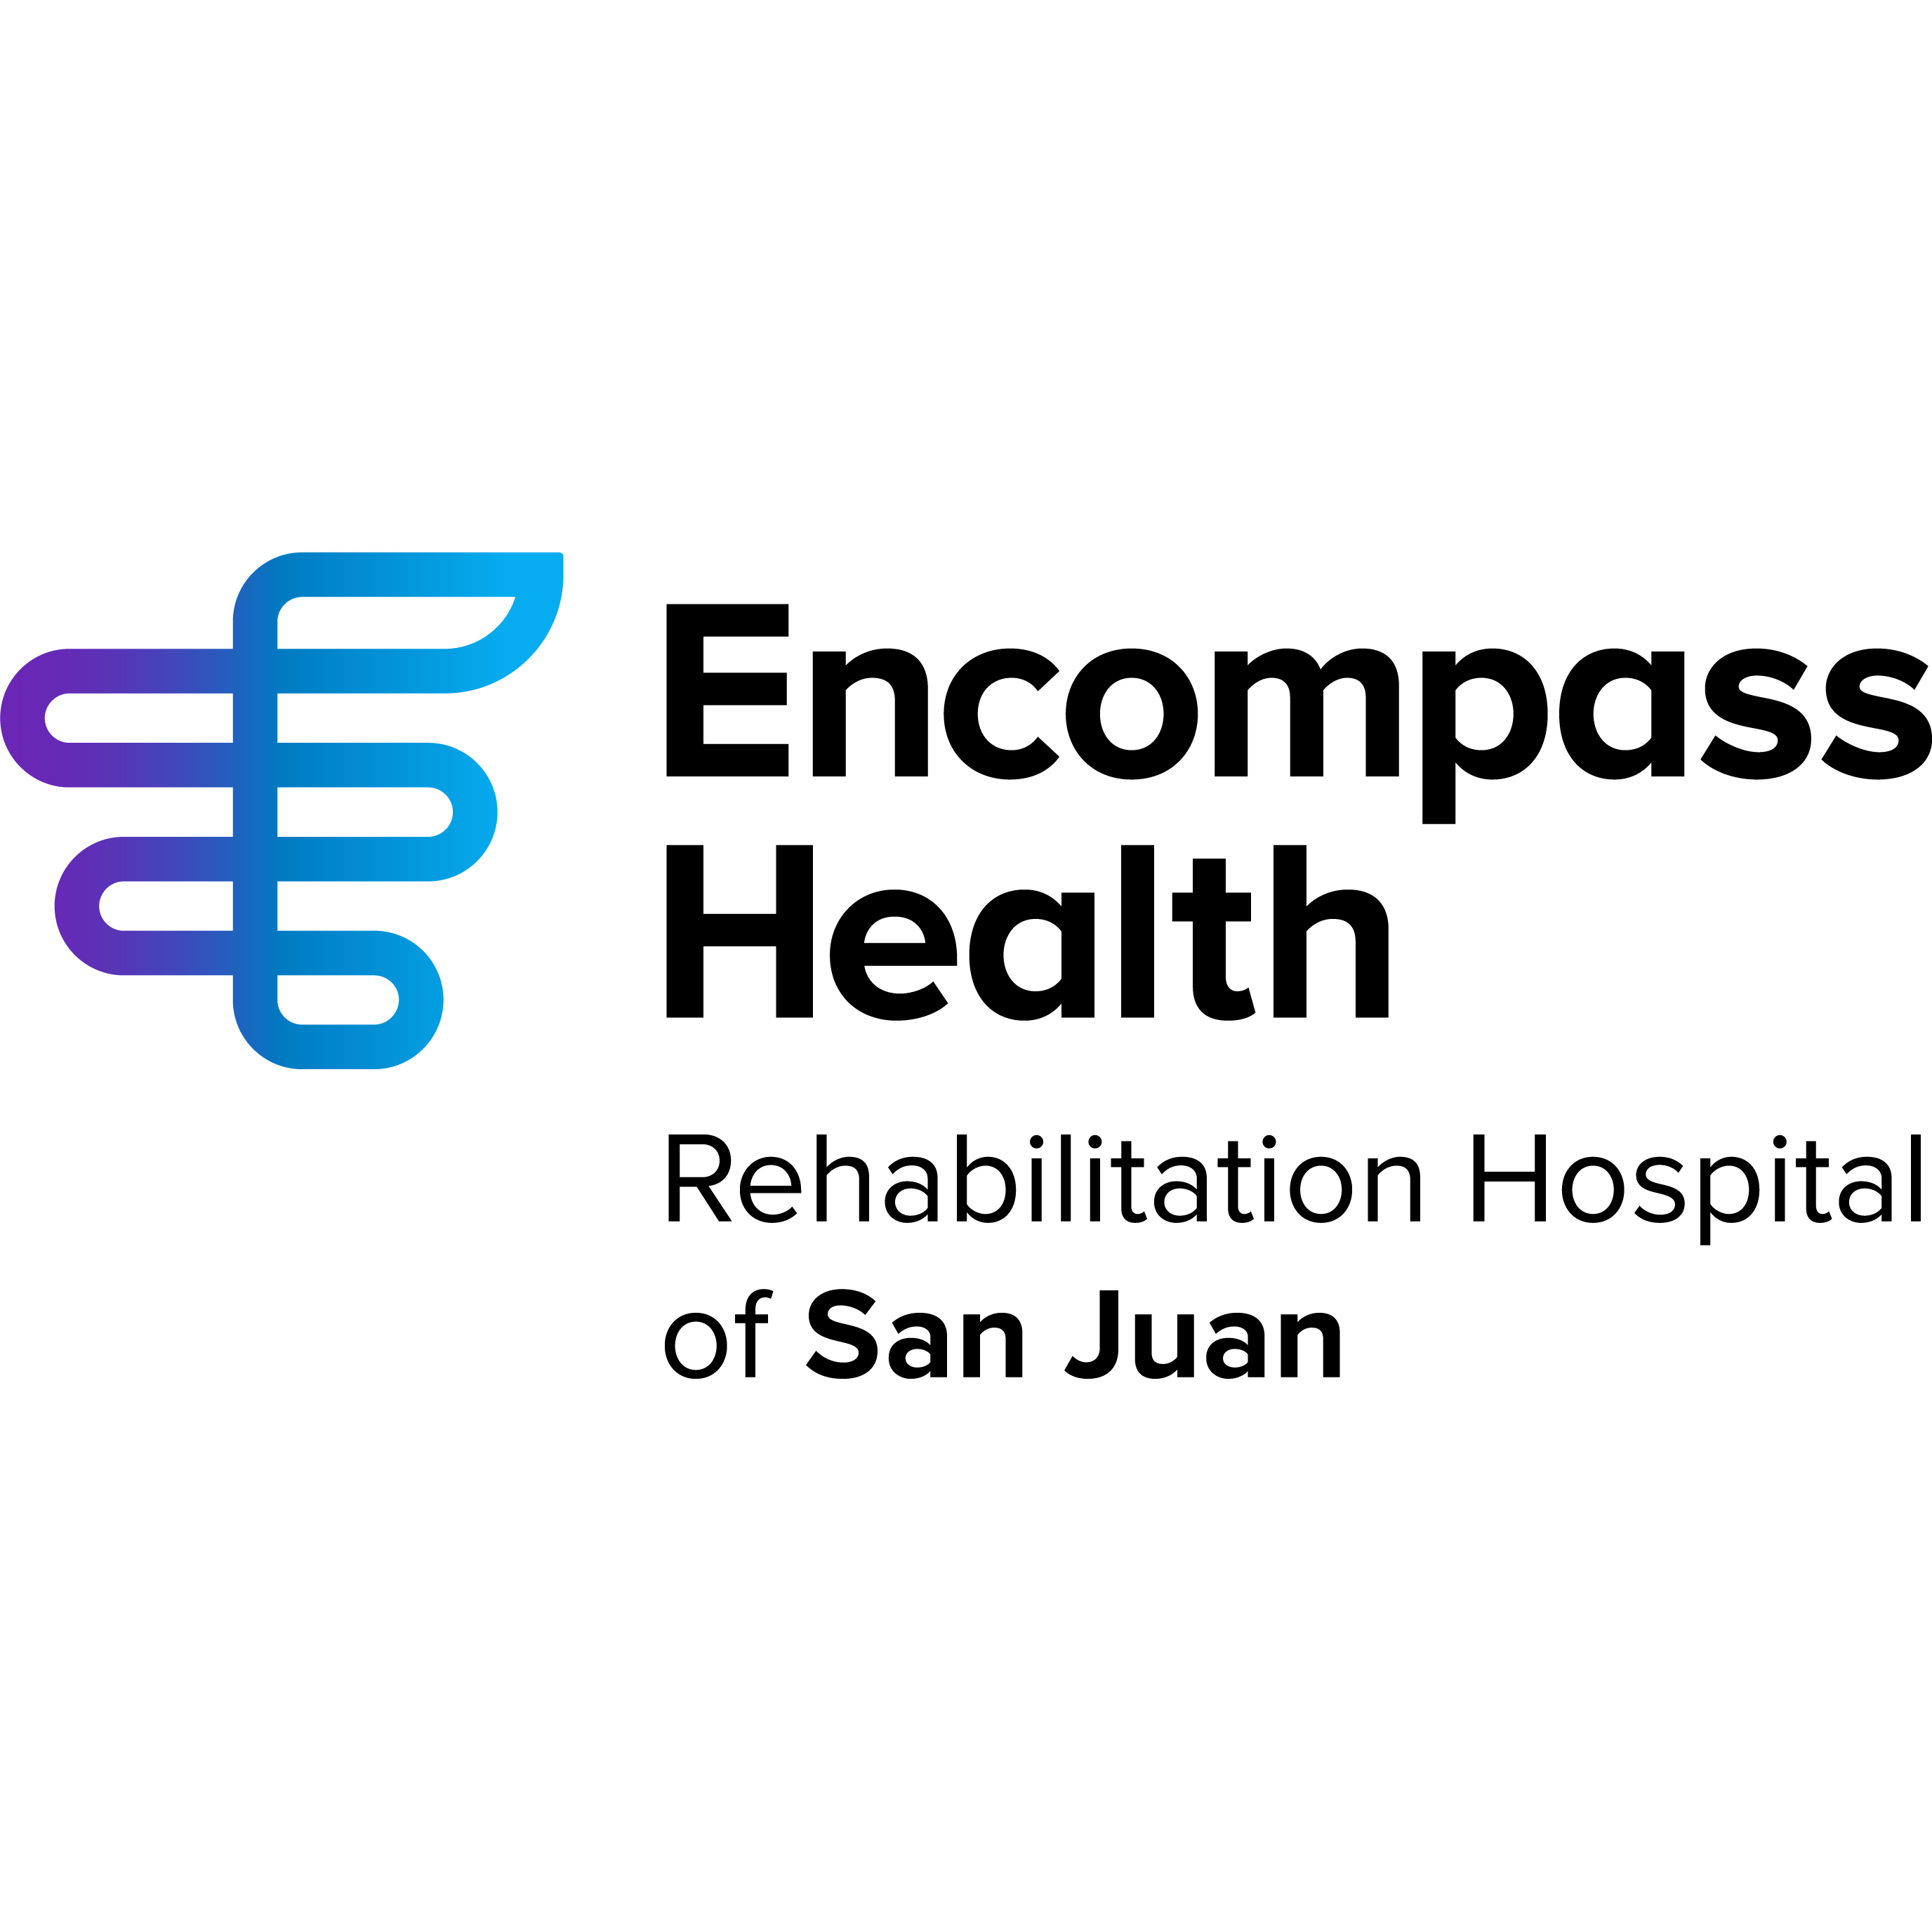 Encompass Health Rehabilitation Hospital of San Juan Logo